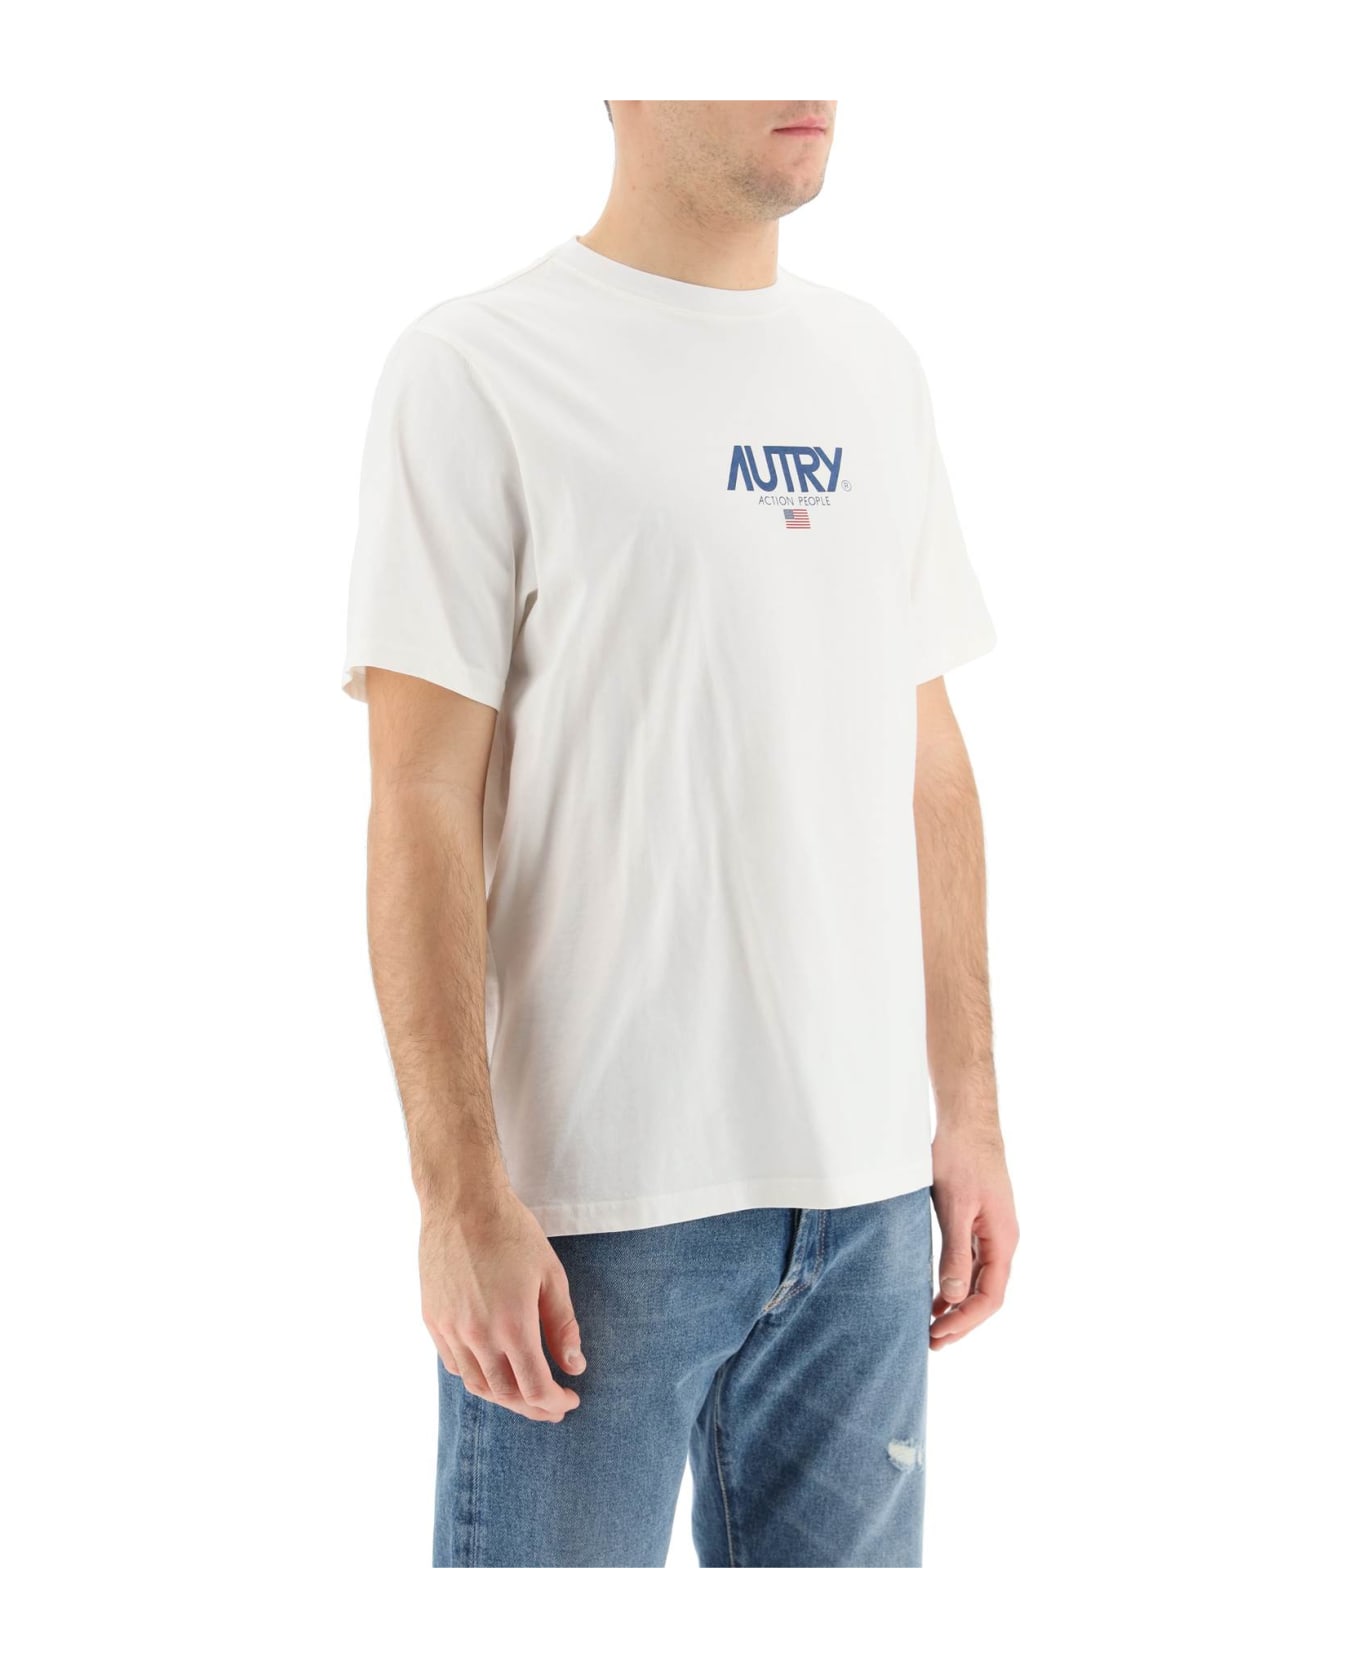 Autry Logo T-shirt - White